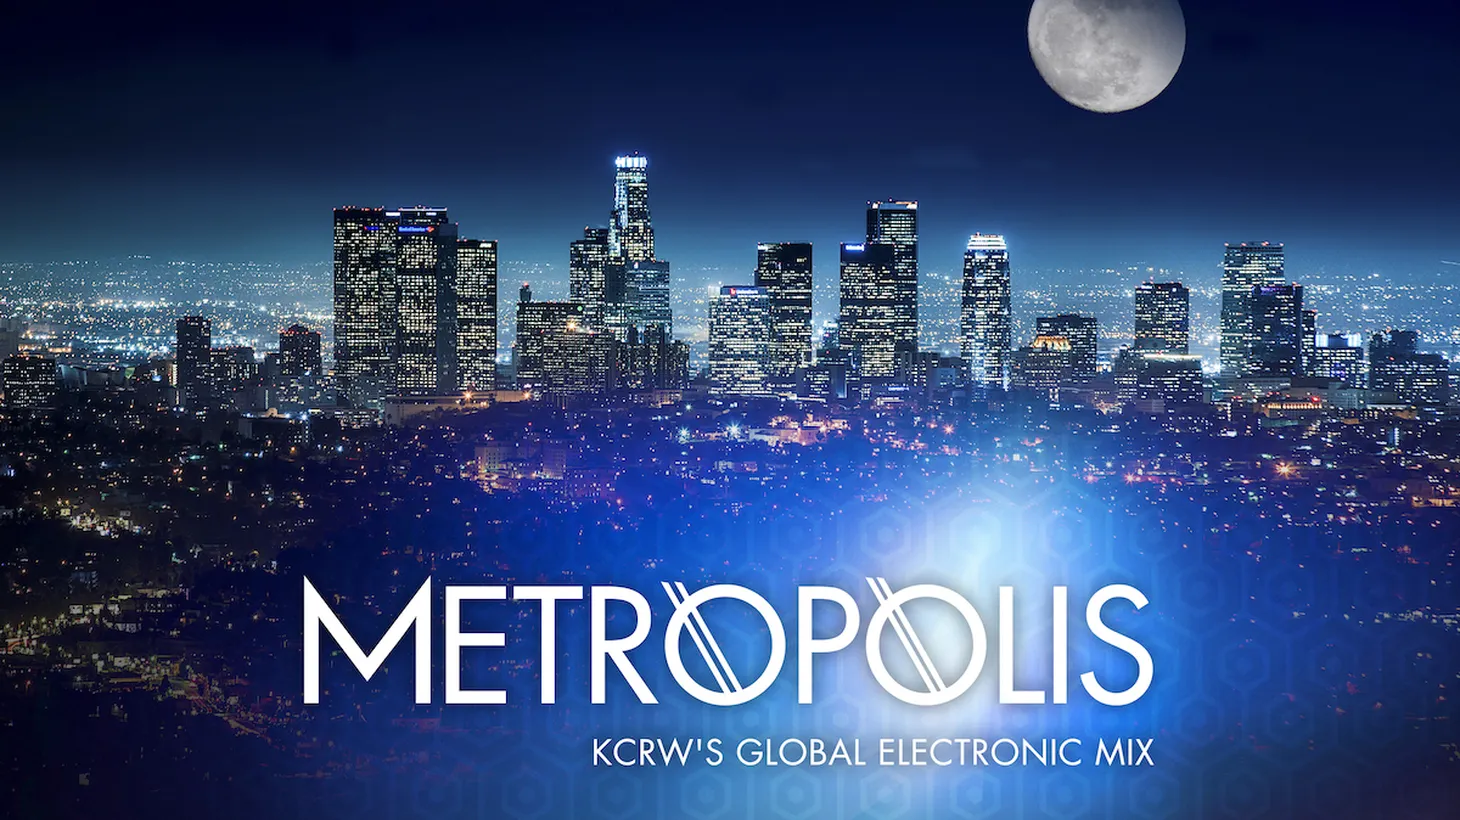 Metropolis playlist, July 2, 2022.